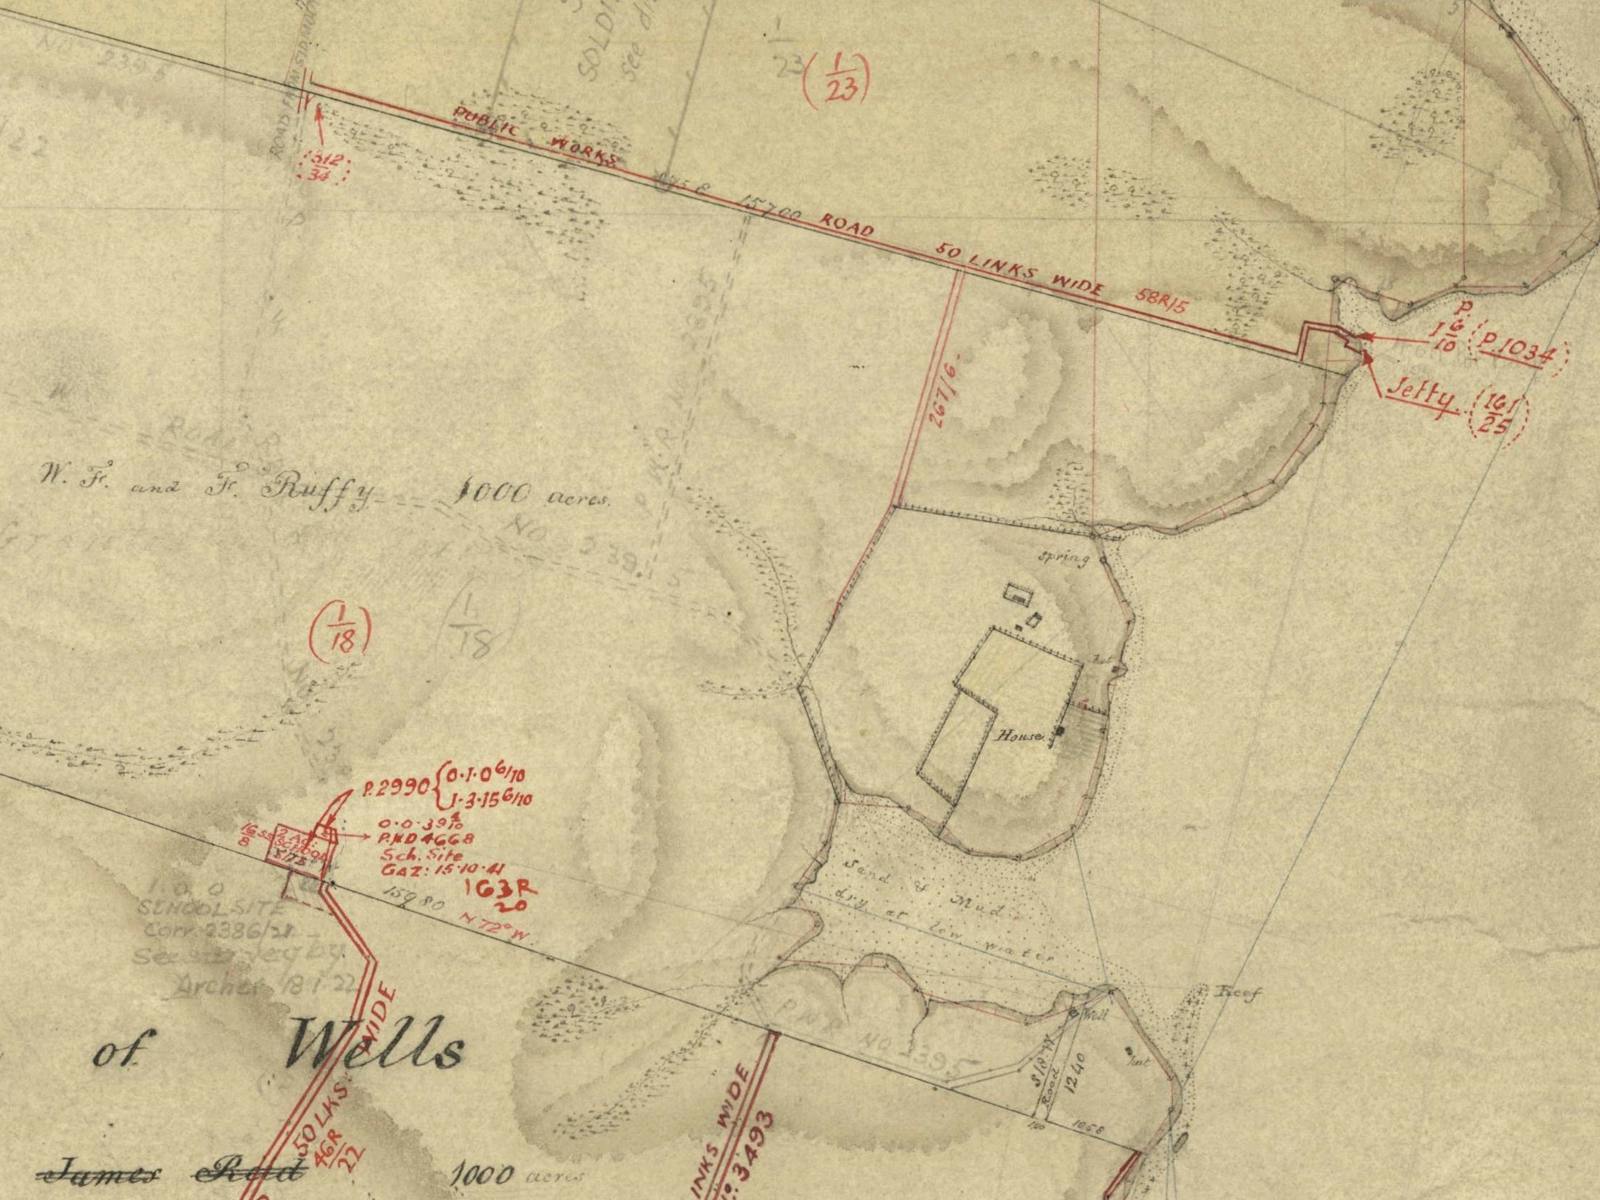 Waterton Hall Land Grant map